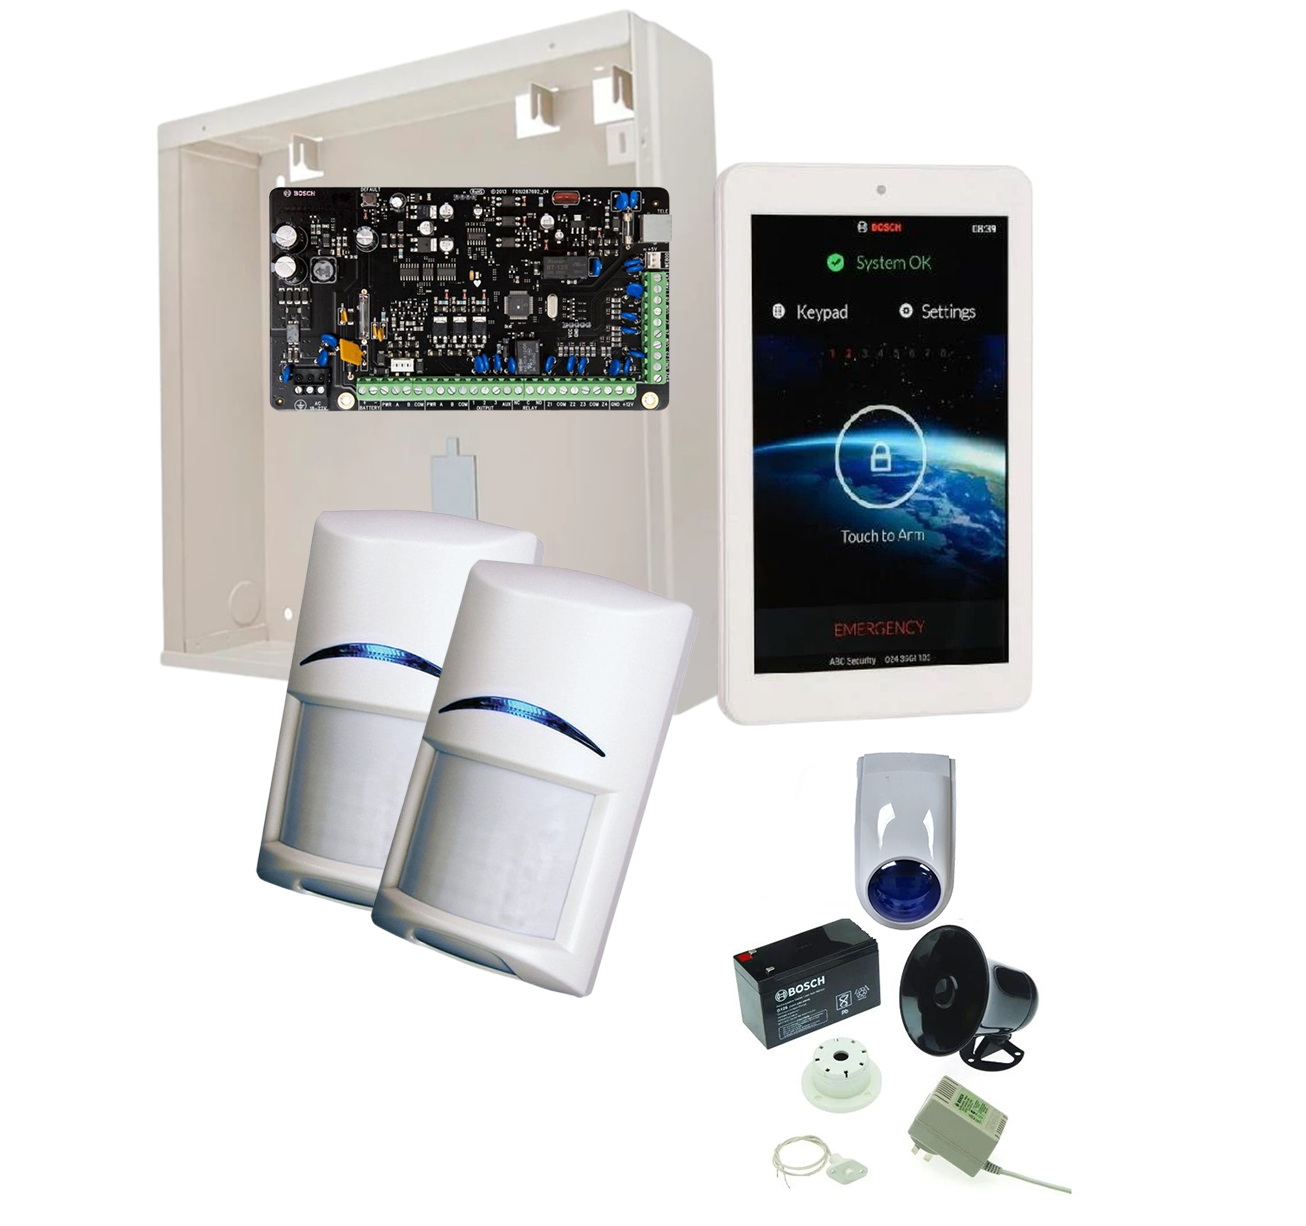 BOSCH, Solution 2000, Alarm kit, Includes ICP-SOL2-P panel, 7" Touchscreen keypad, 2x PIR detectors